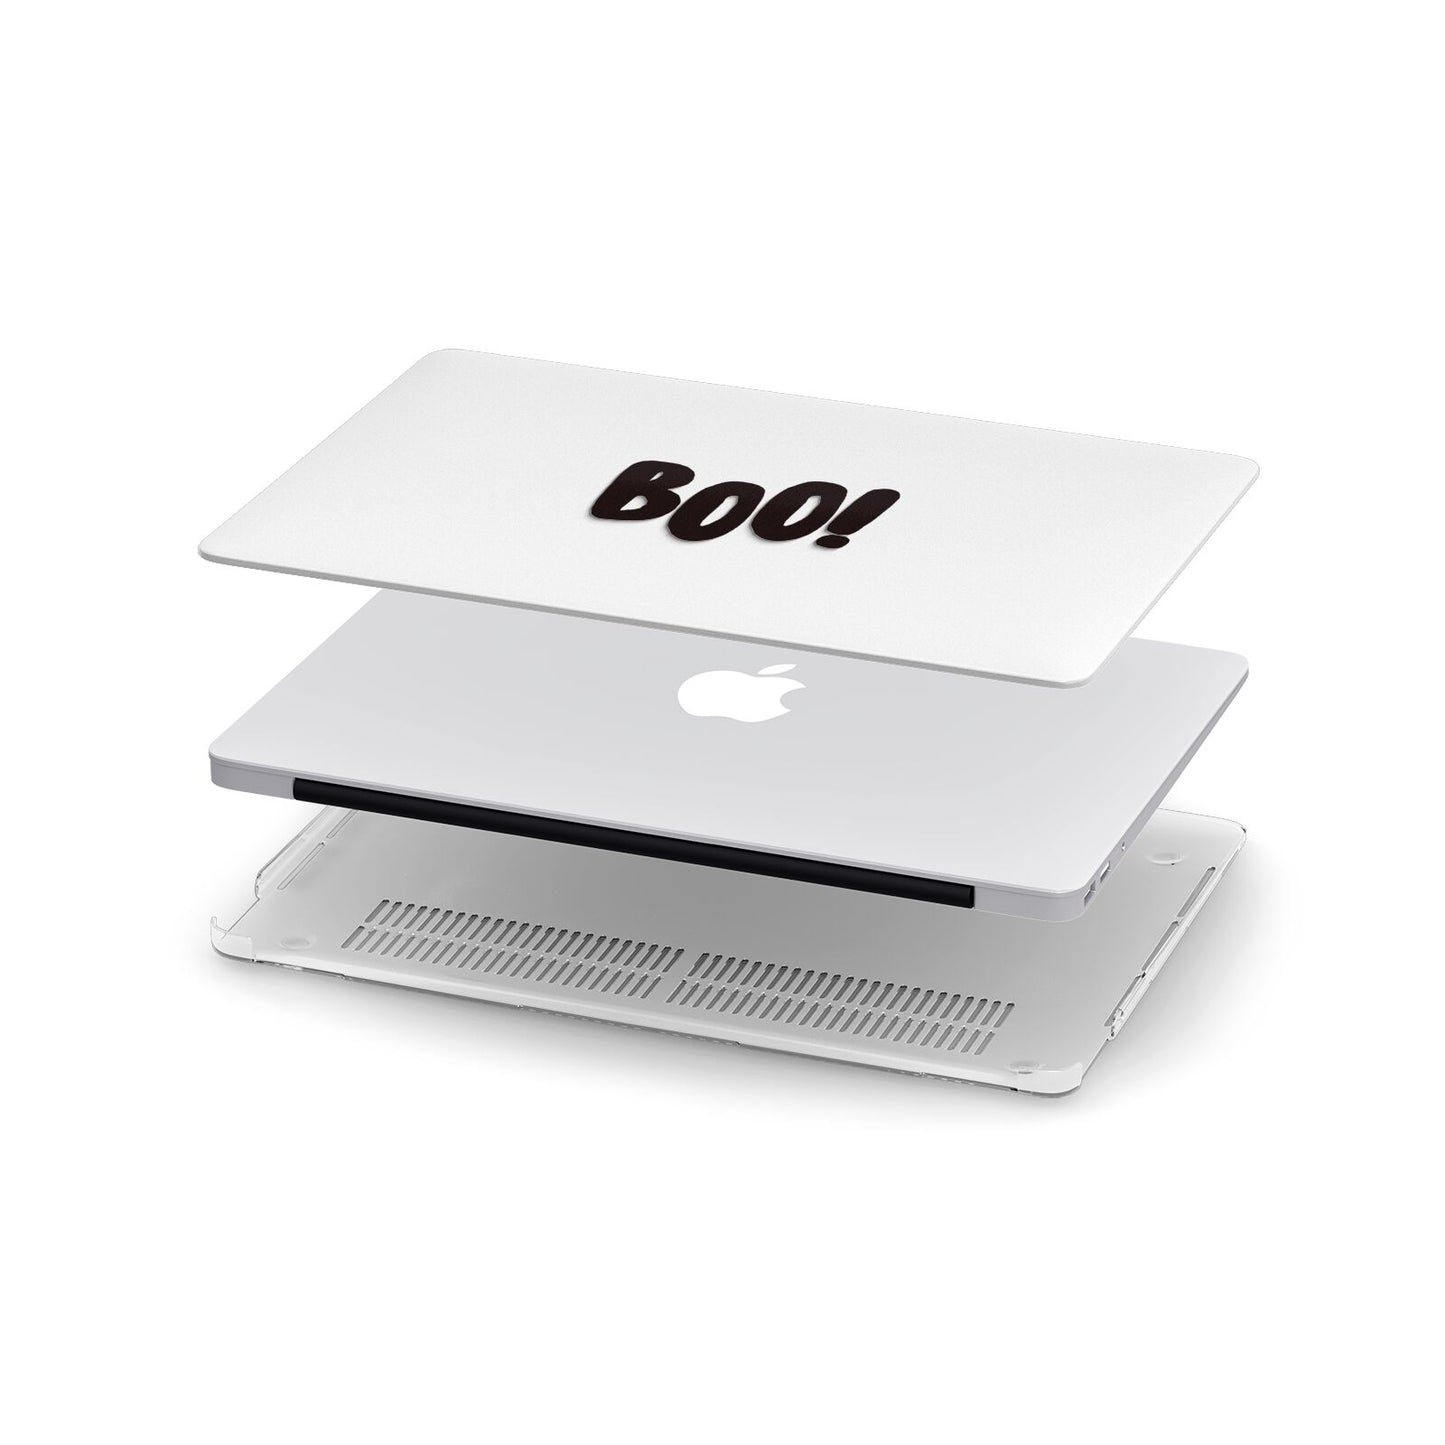 Boo Black Apple MacBook Case in Detail